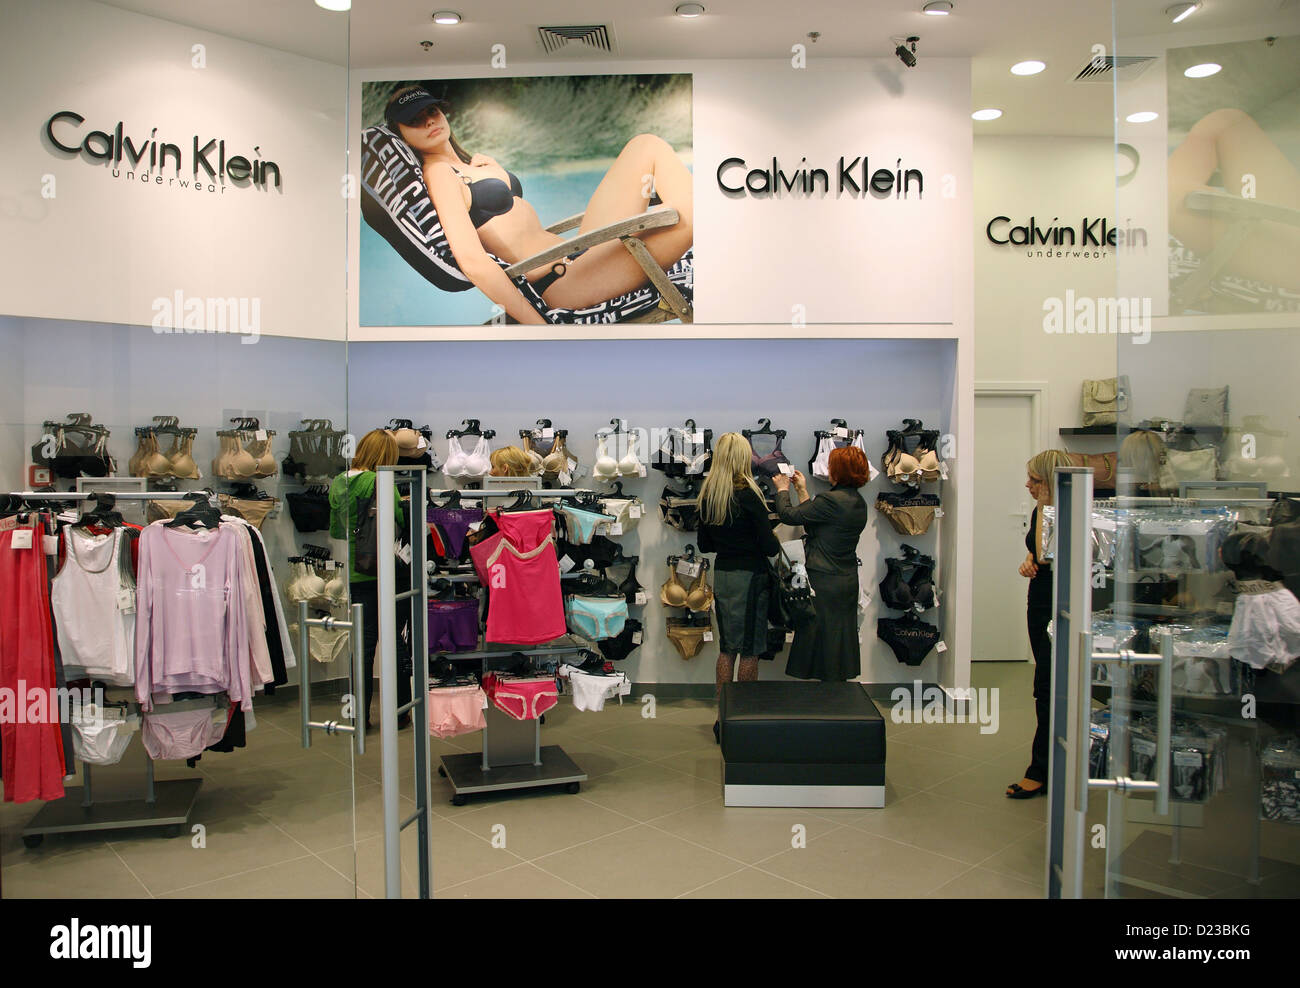 Poznan, Poland, from Calvin Klein Underwear in the shopping center Galeria  MALTA Stock Photo - Alamy